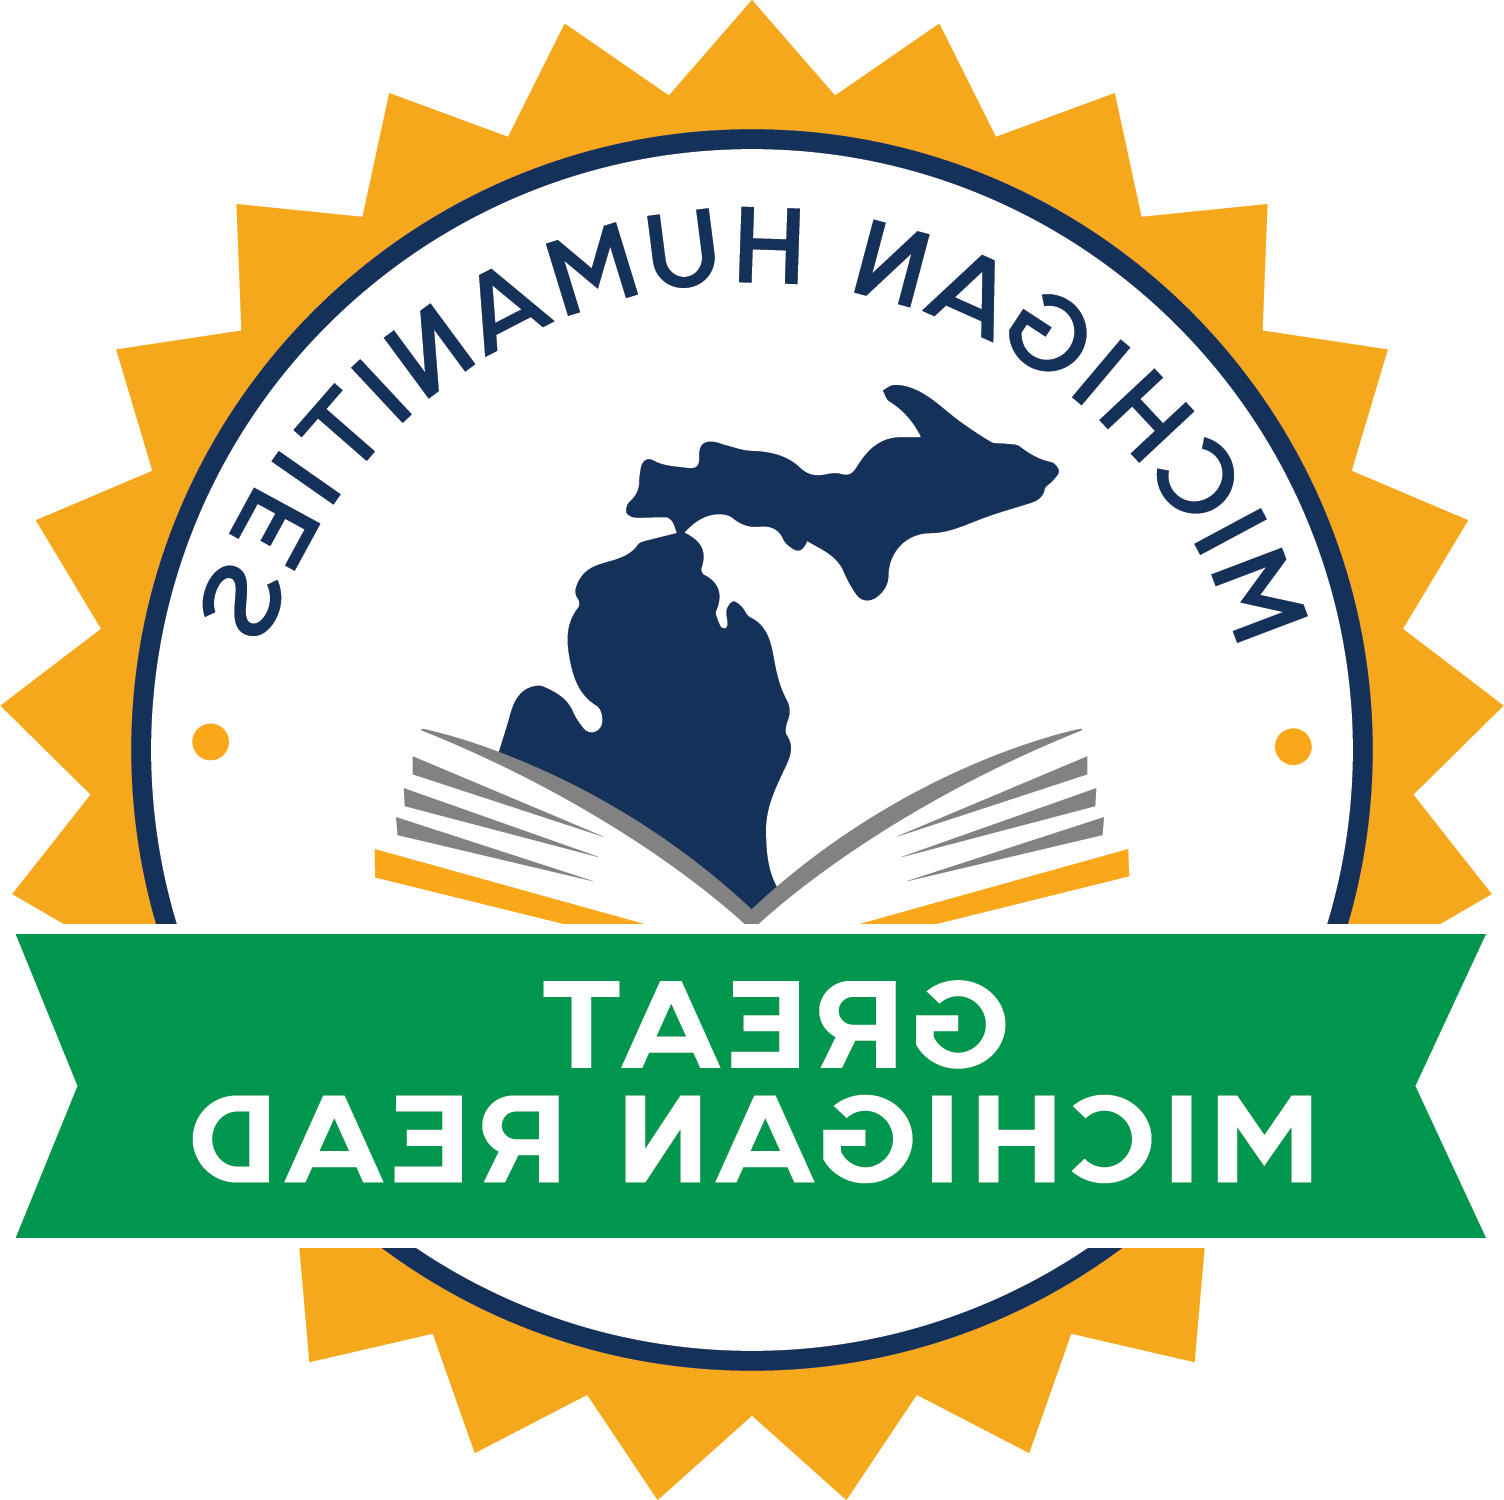 GRM Logo